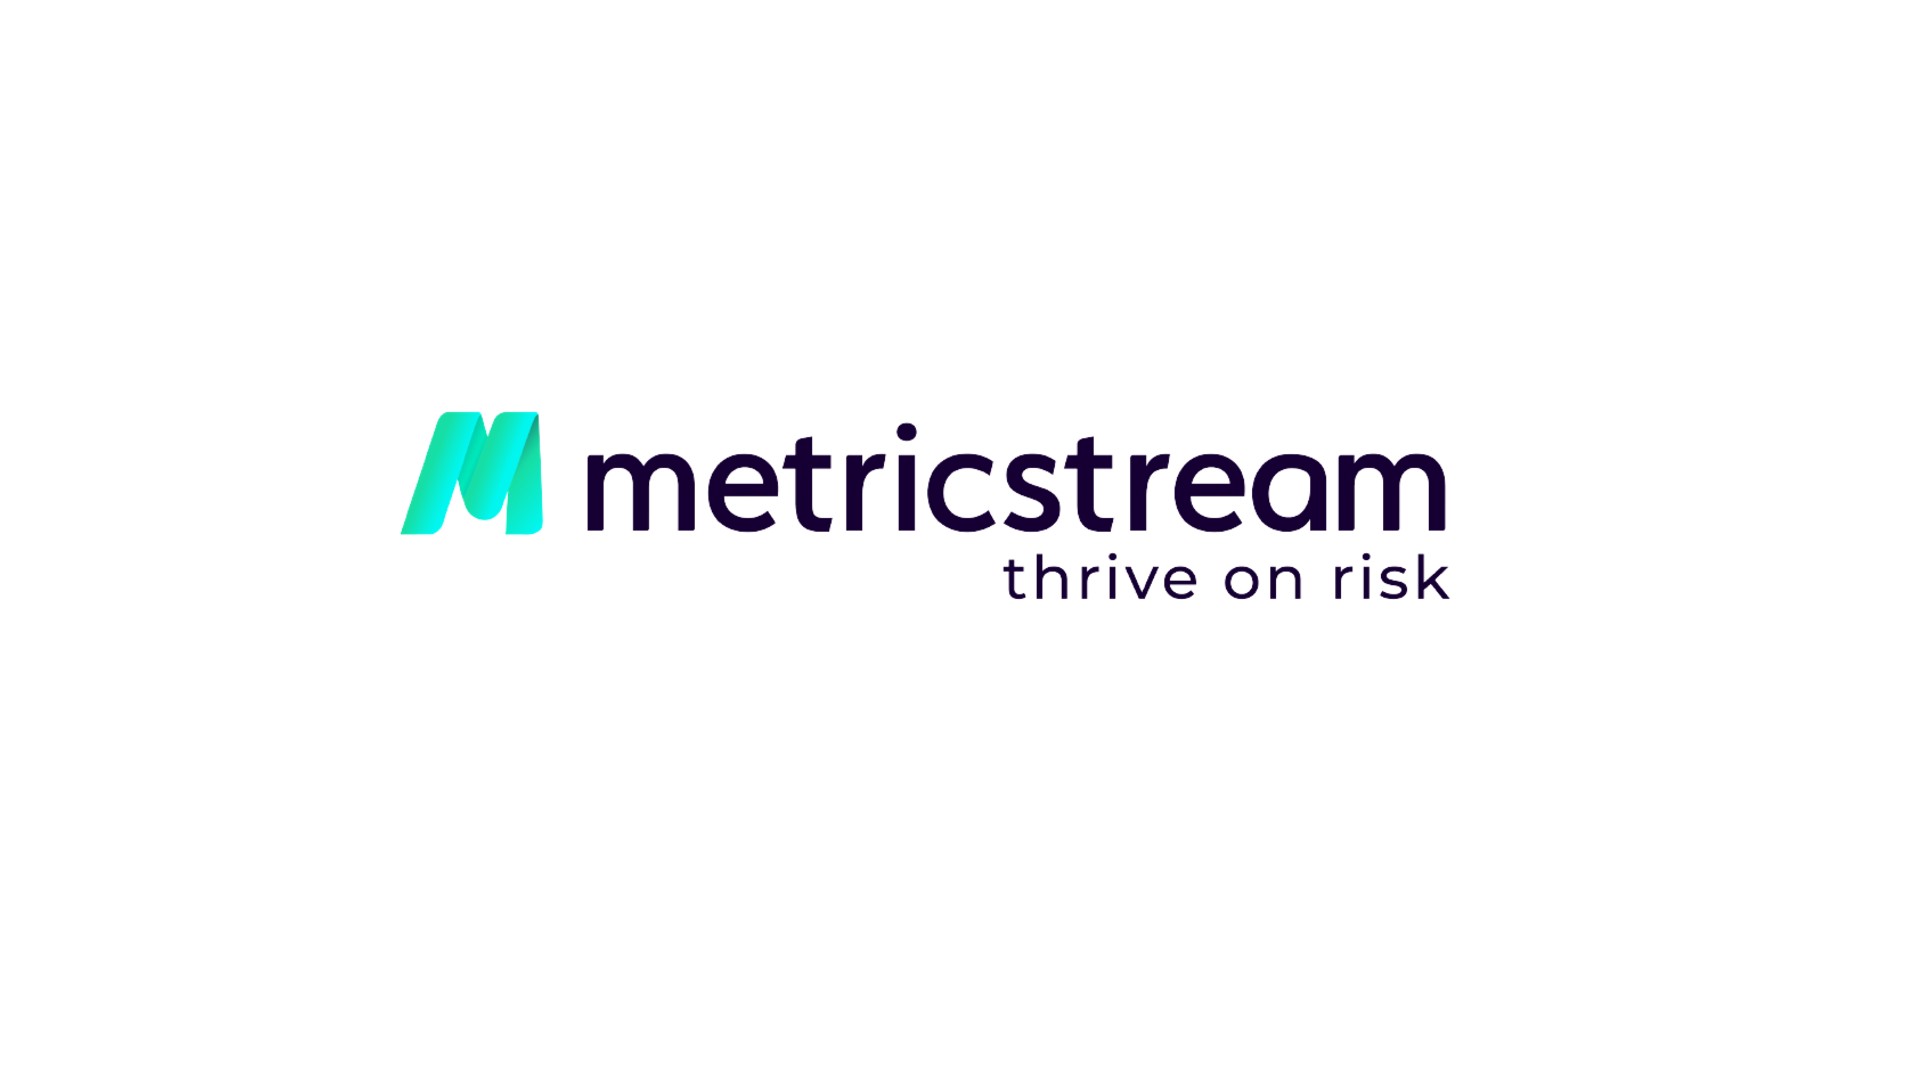 www.metricstream.com